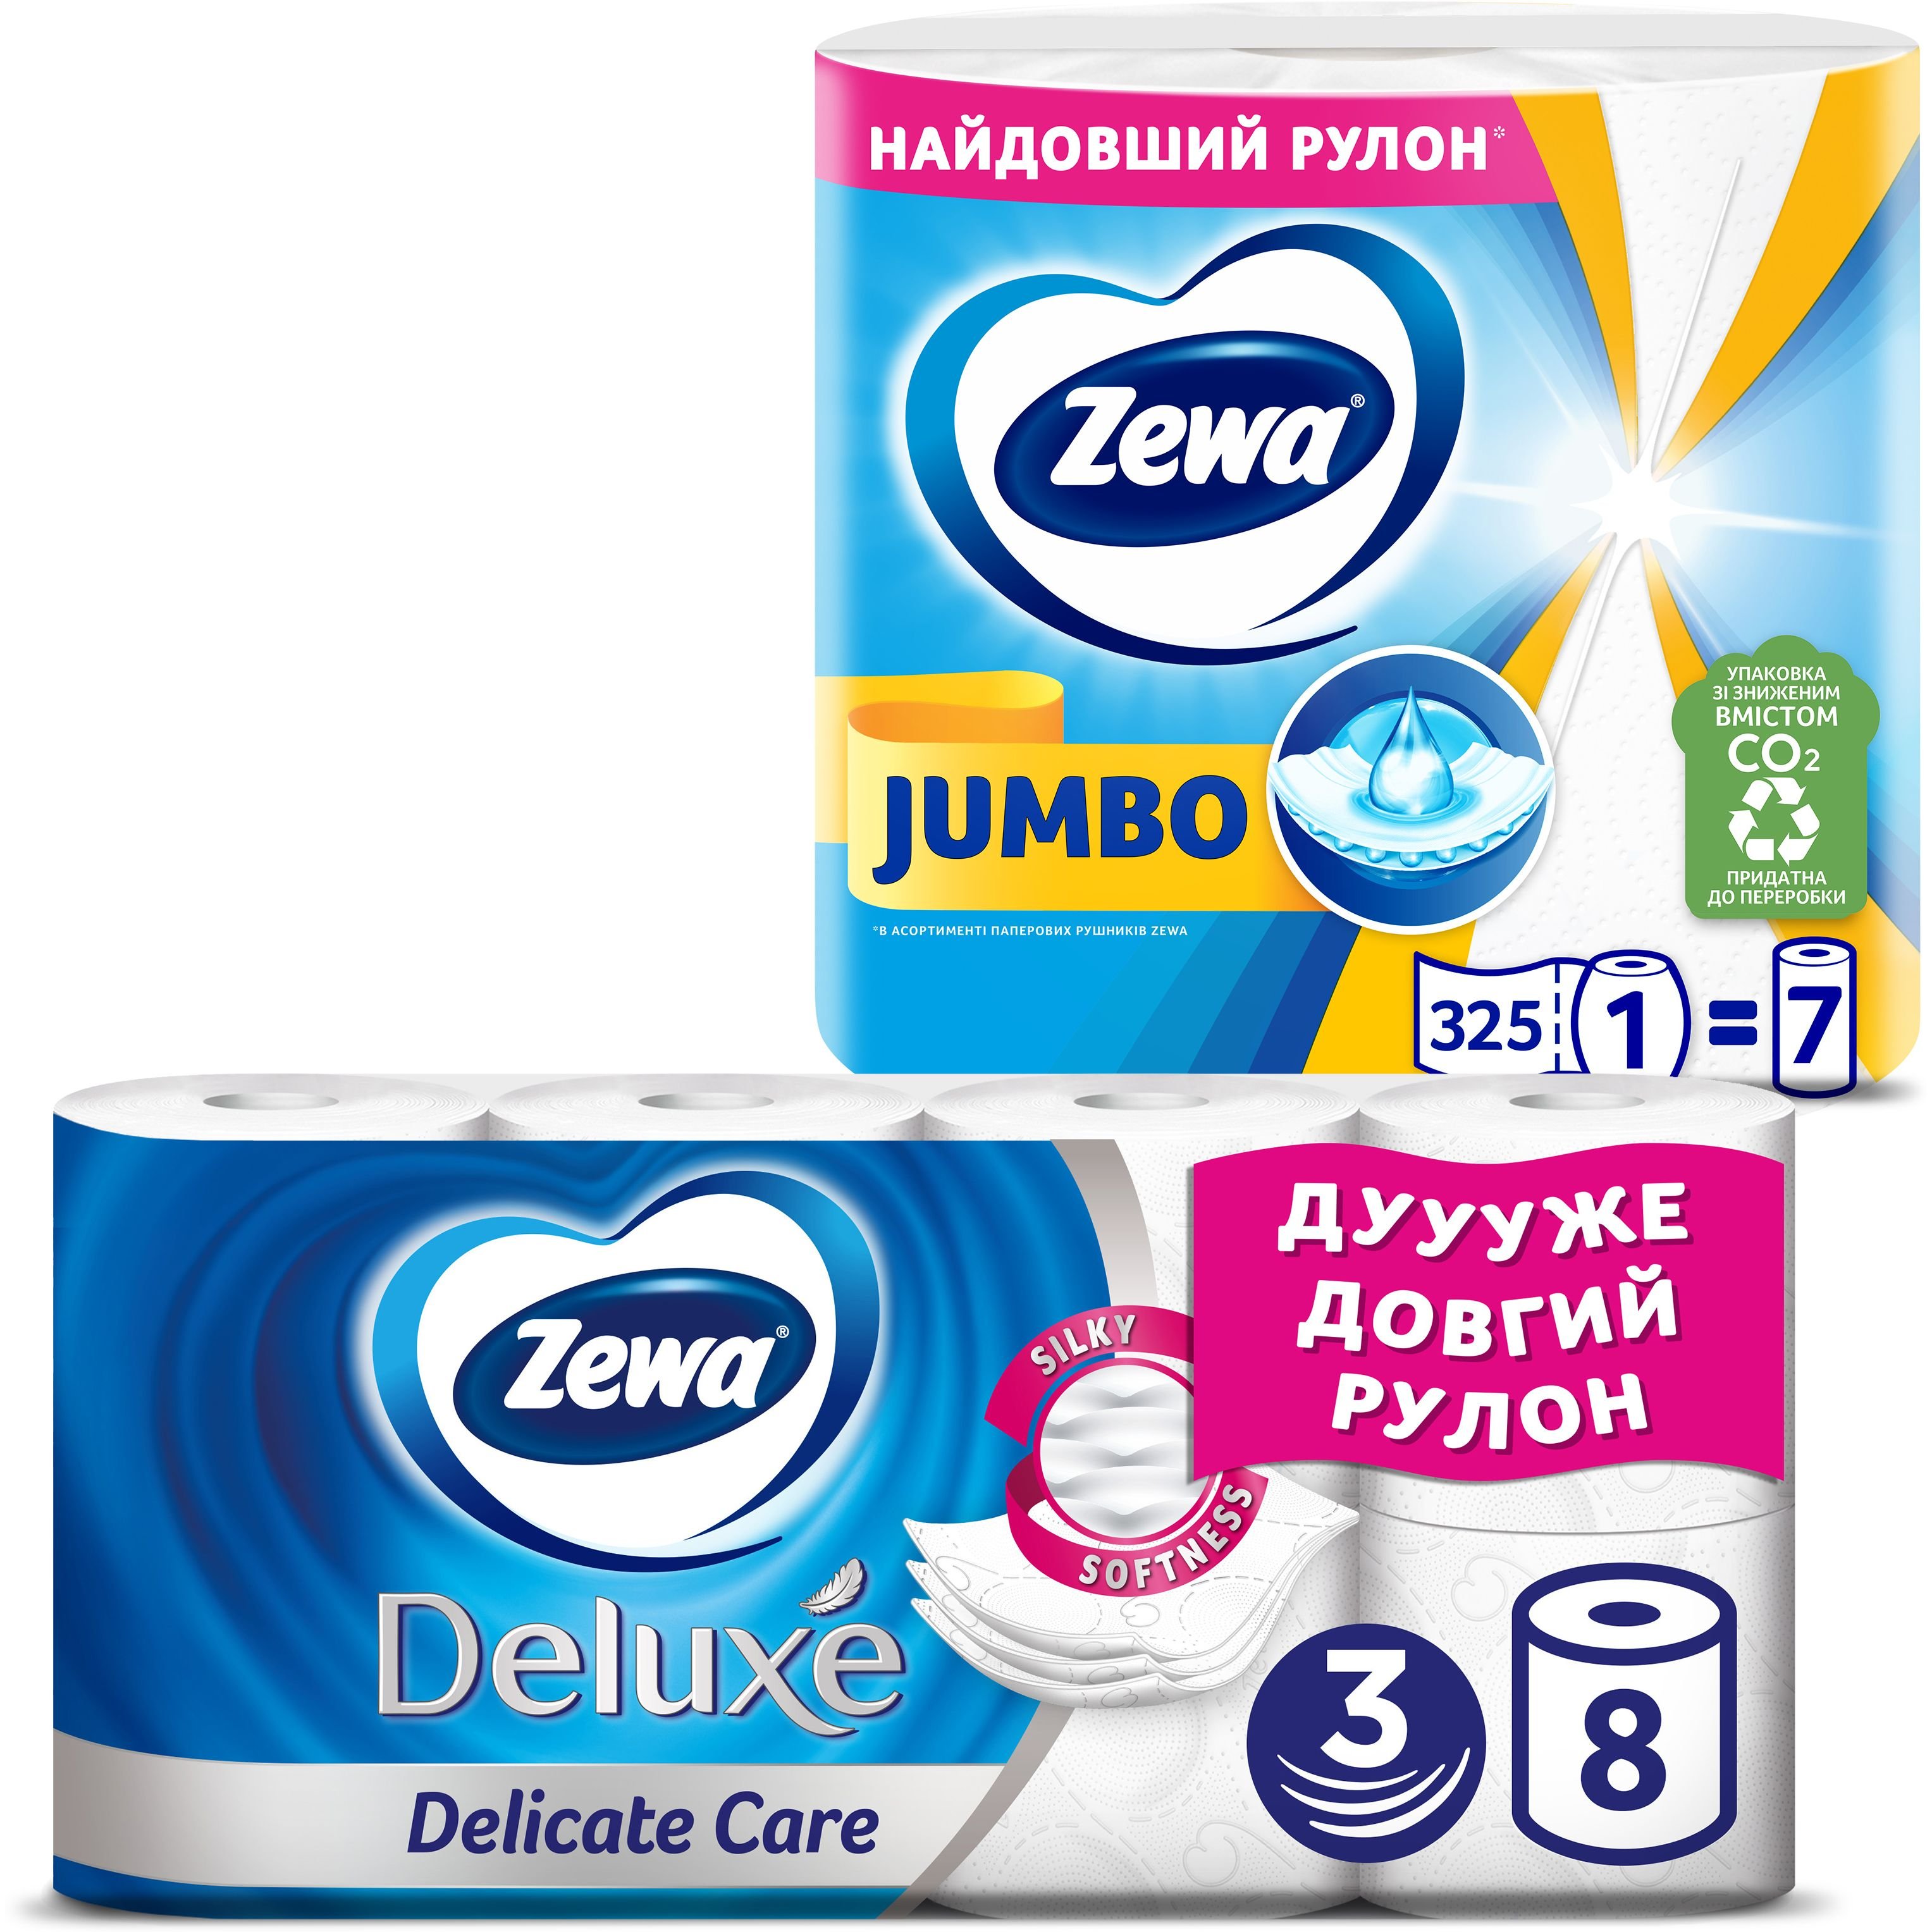 Туалетная бумага Zewa Deluxe трехслойная 8 рулонов + Бумажные полотенца Zewa Jumbo двухслойные 1 рулон - фото 1